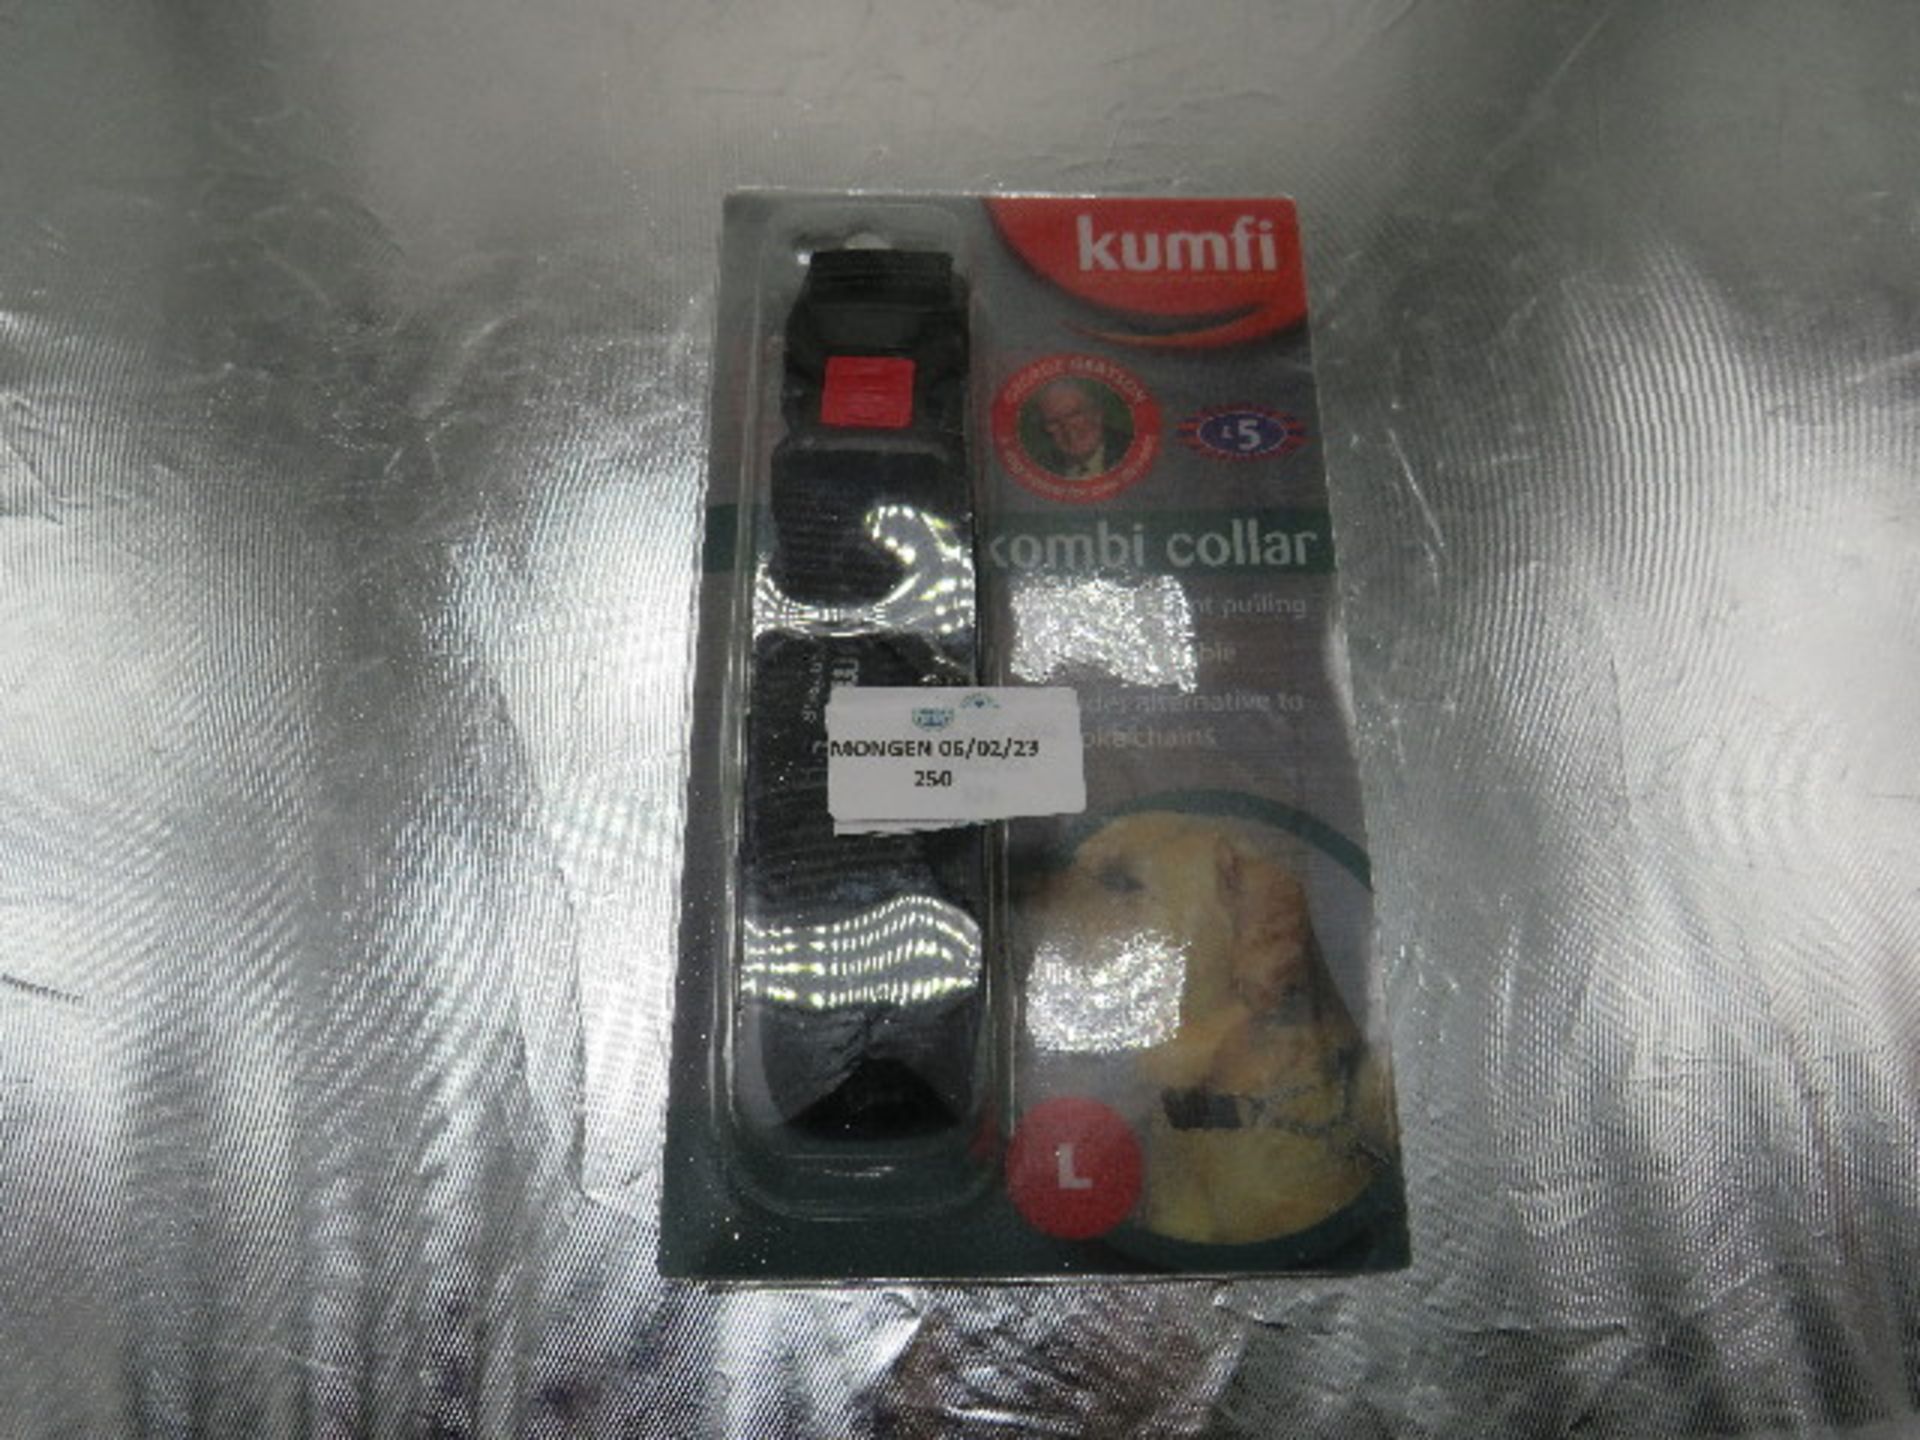 5x Kumfi - Combi Collar - Black - Size Large - New & Packaged.